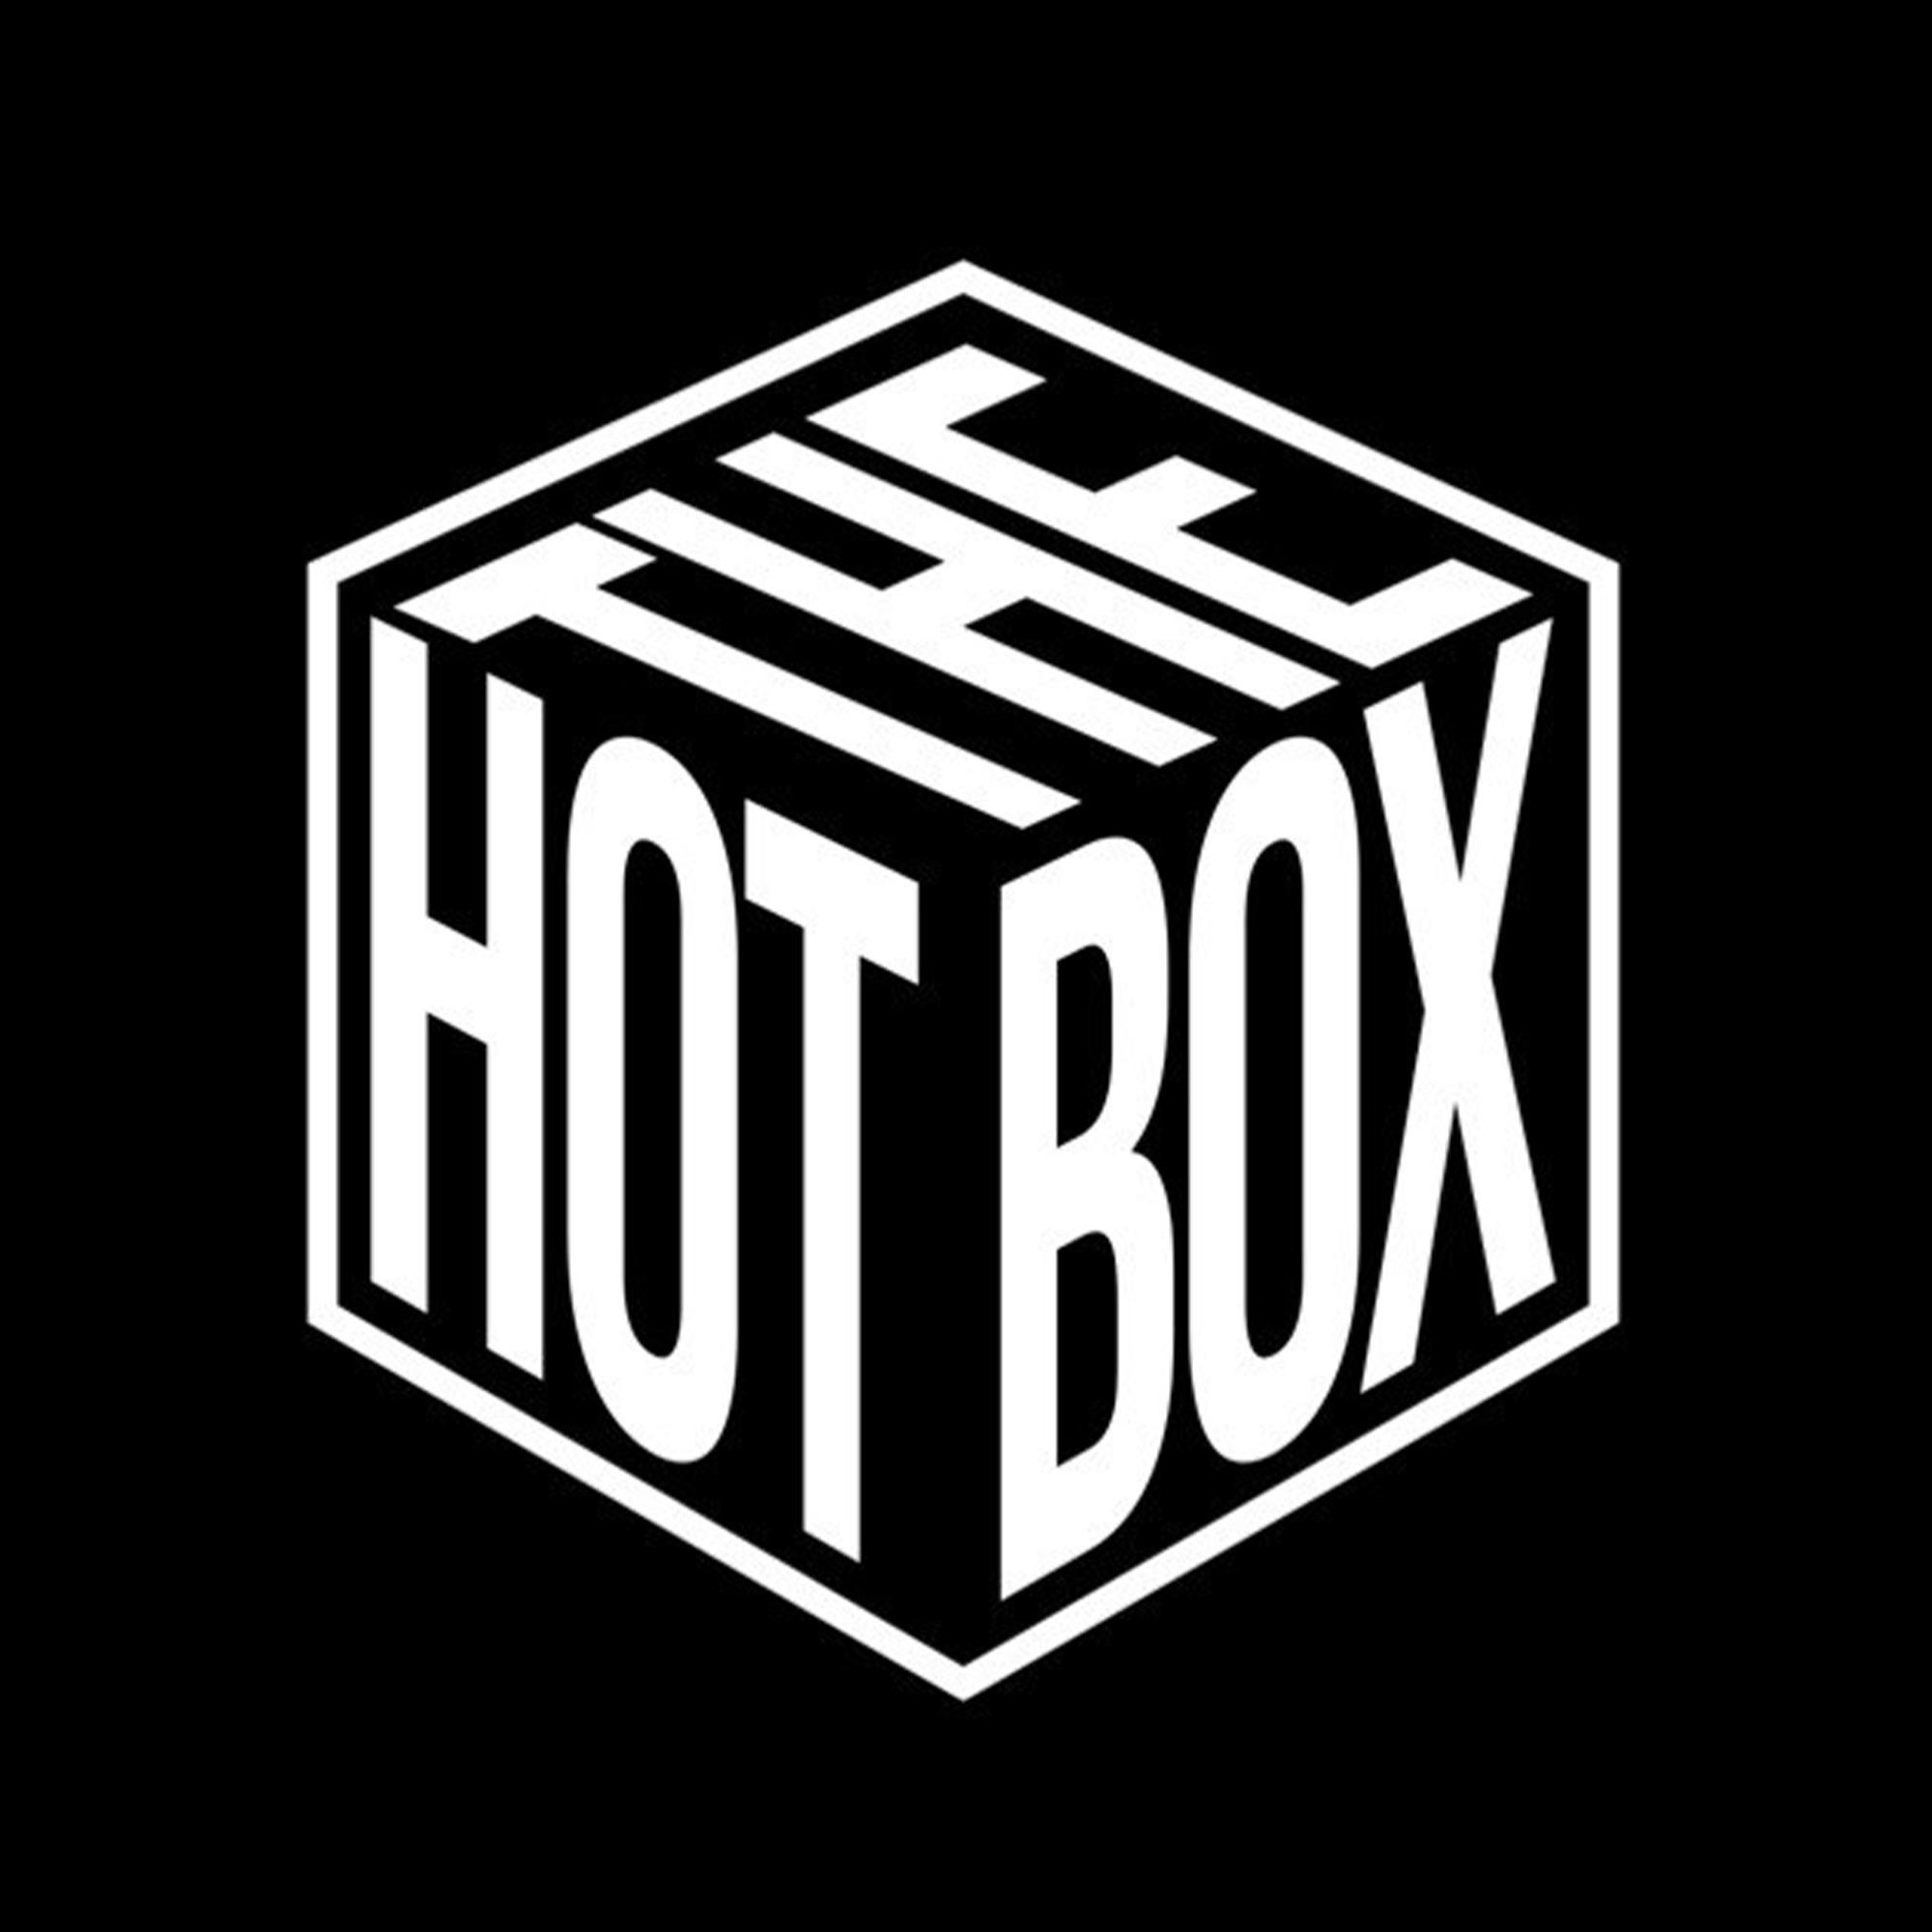 THE HOT BOX